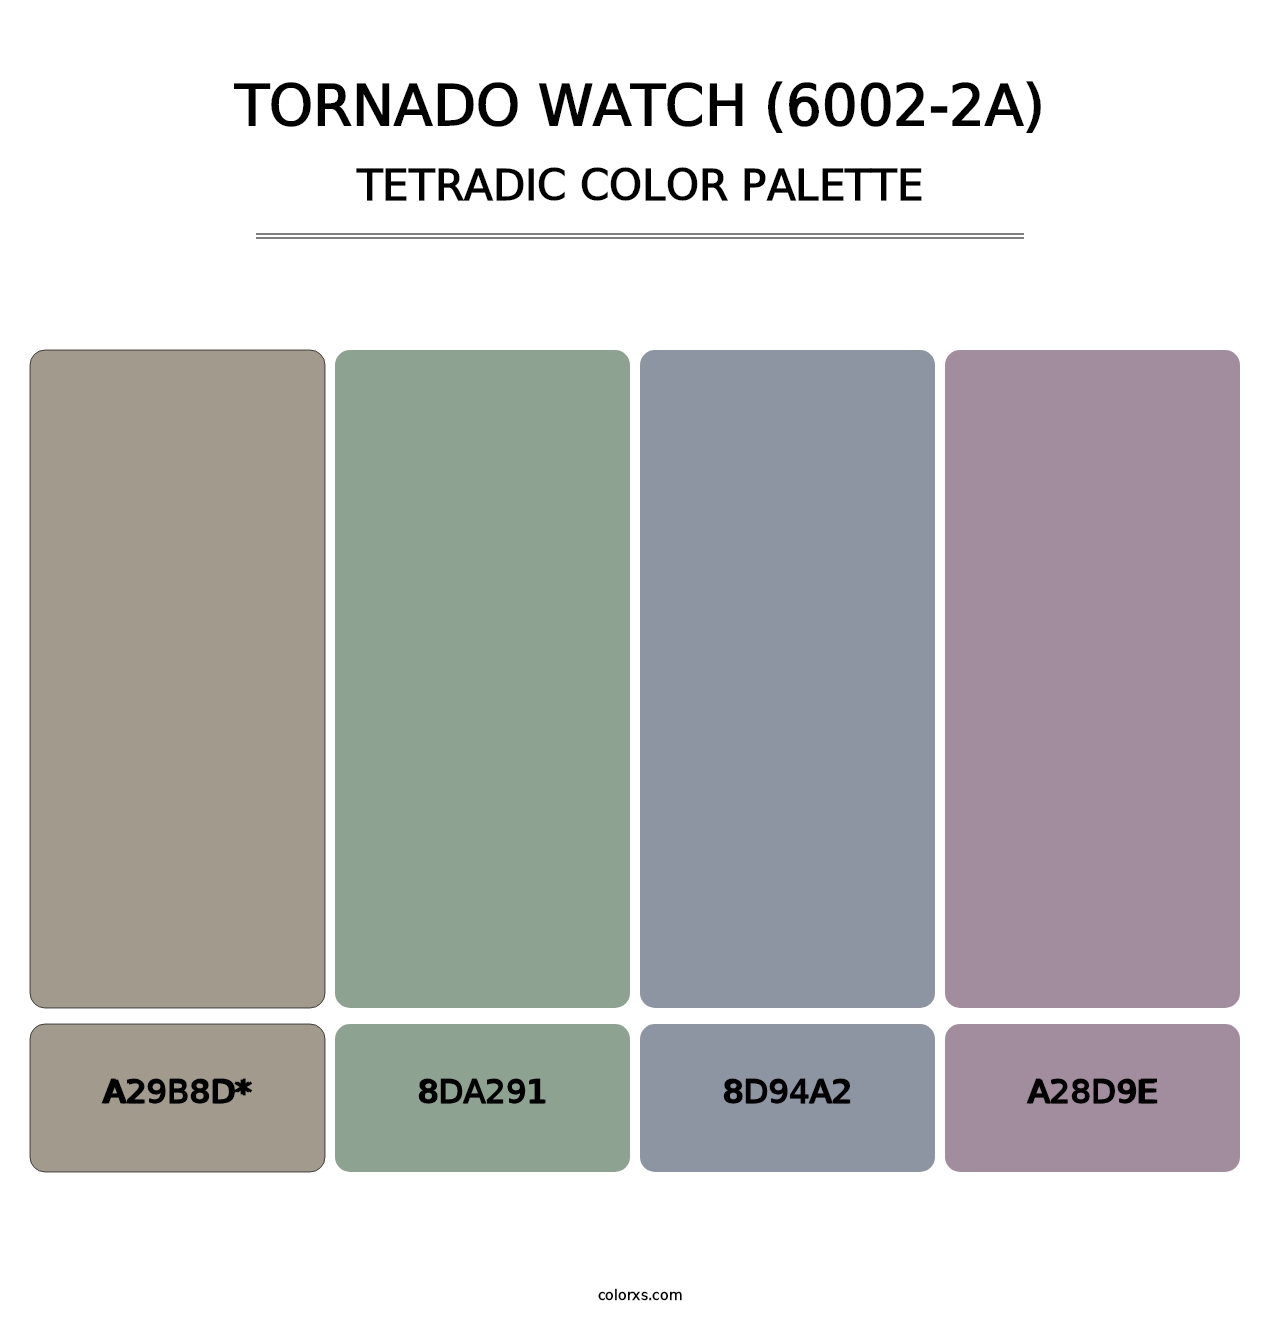 Tornado Watch (6002-2A) - Tetradic Color Palette